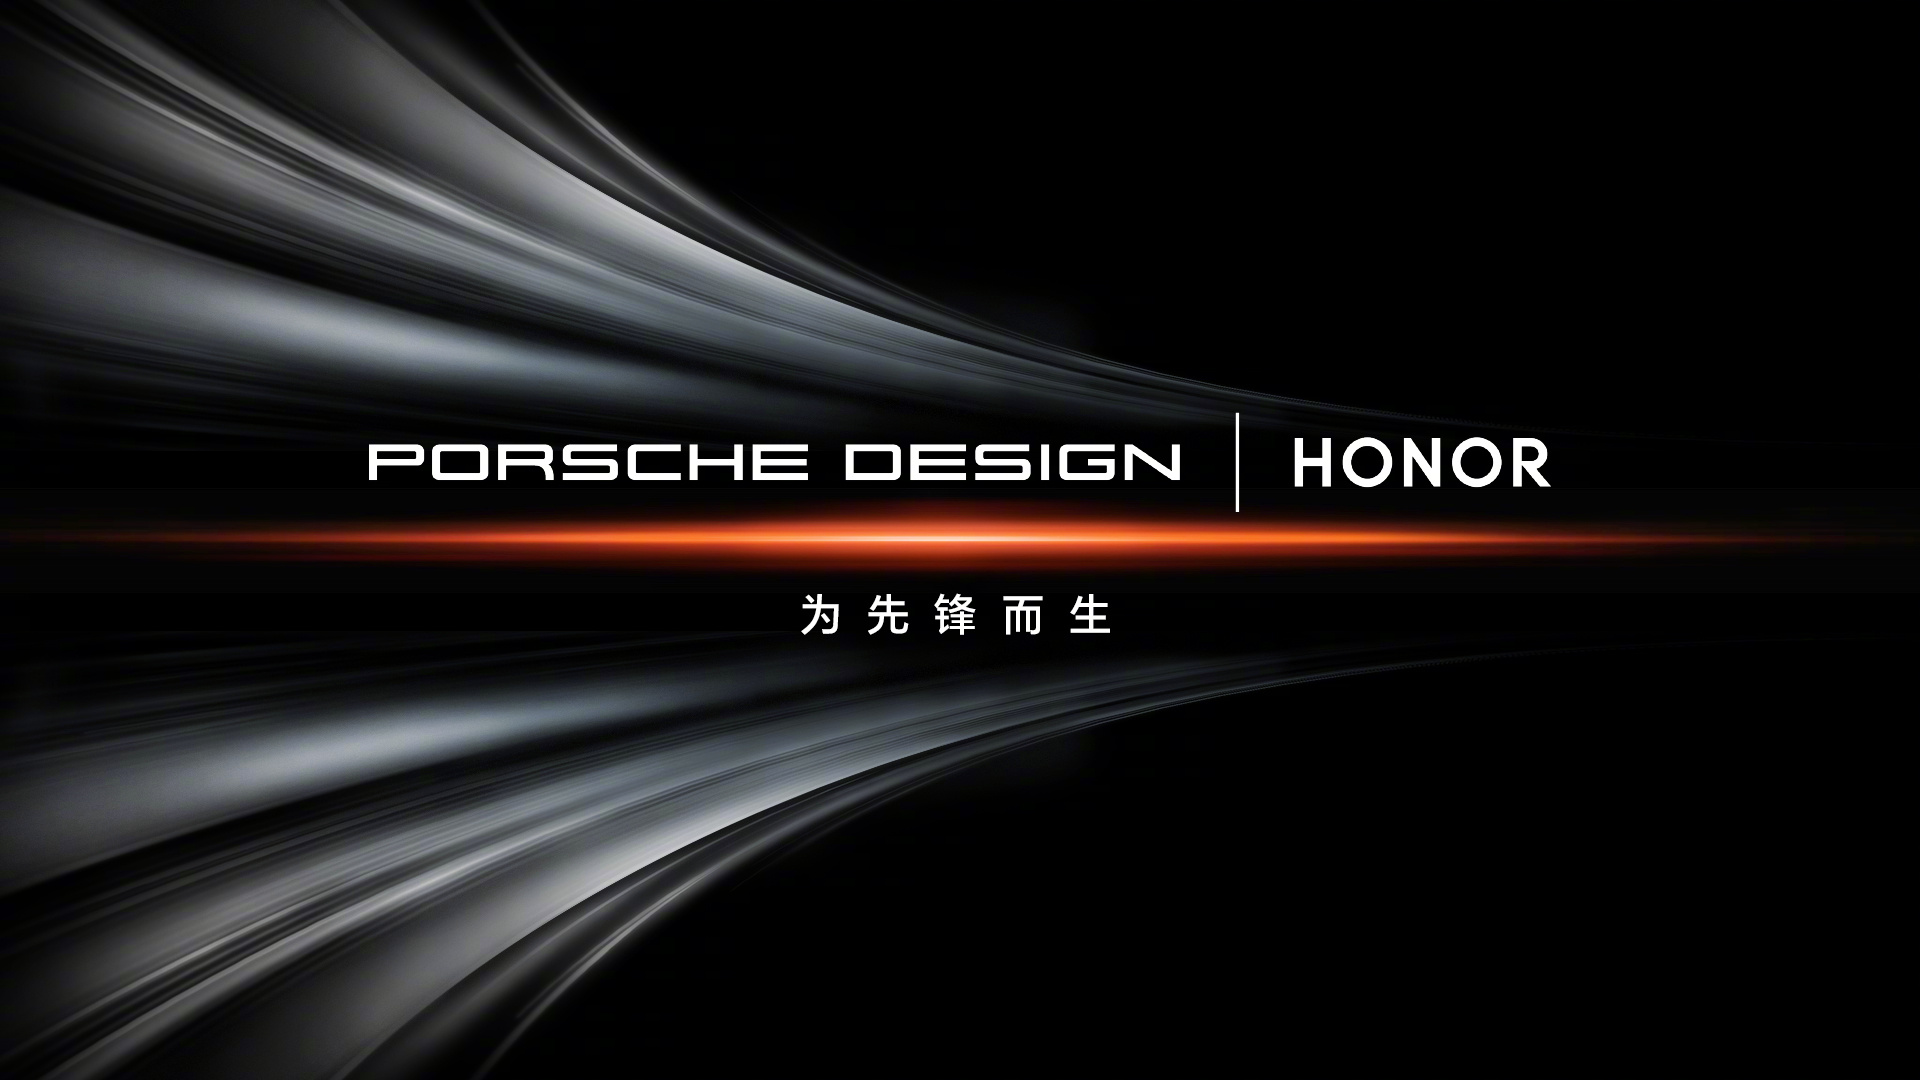 Honor x Porsche Design smartphone teased ahead of Magic6 series launch